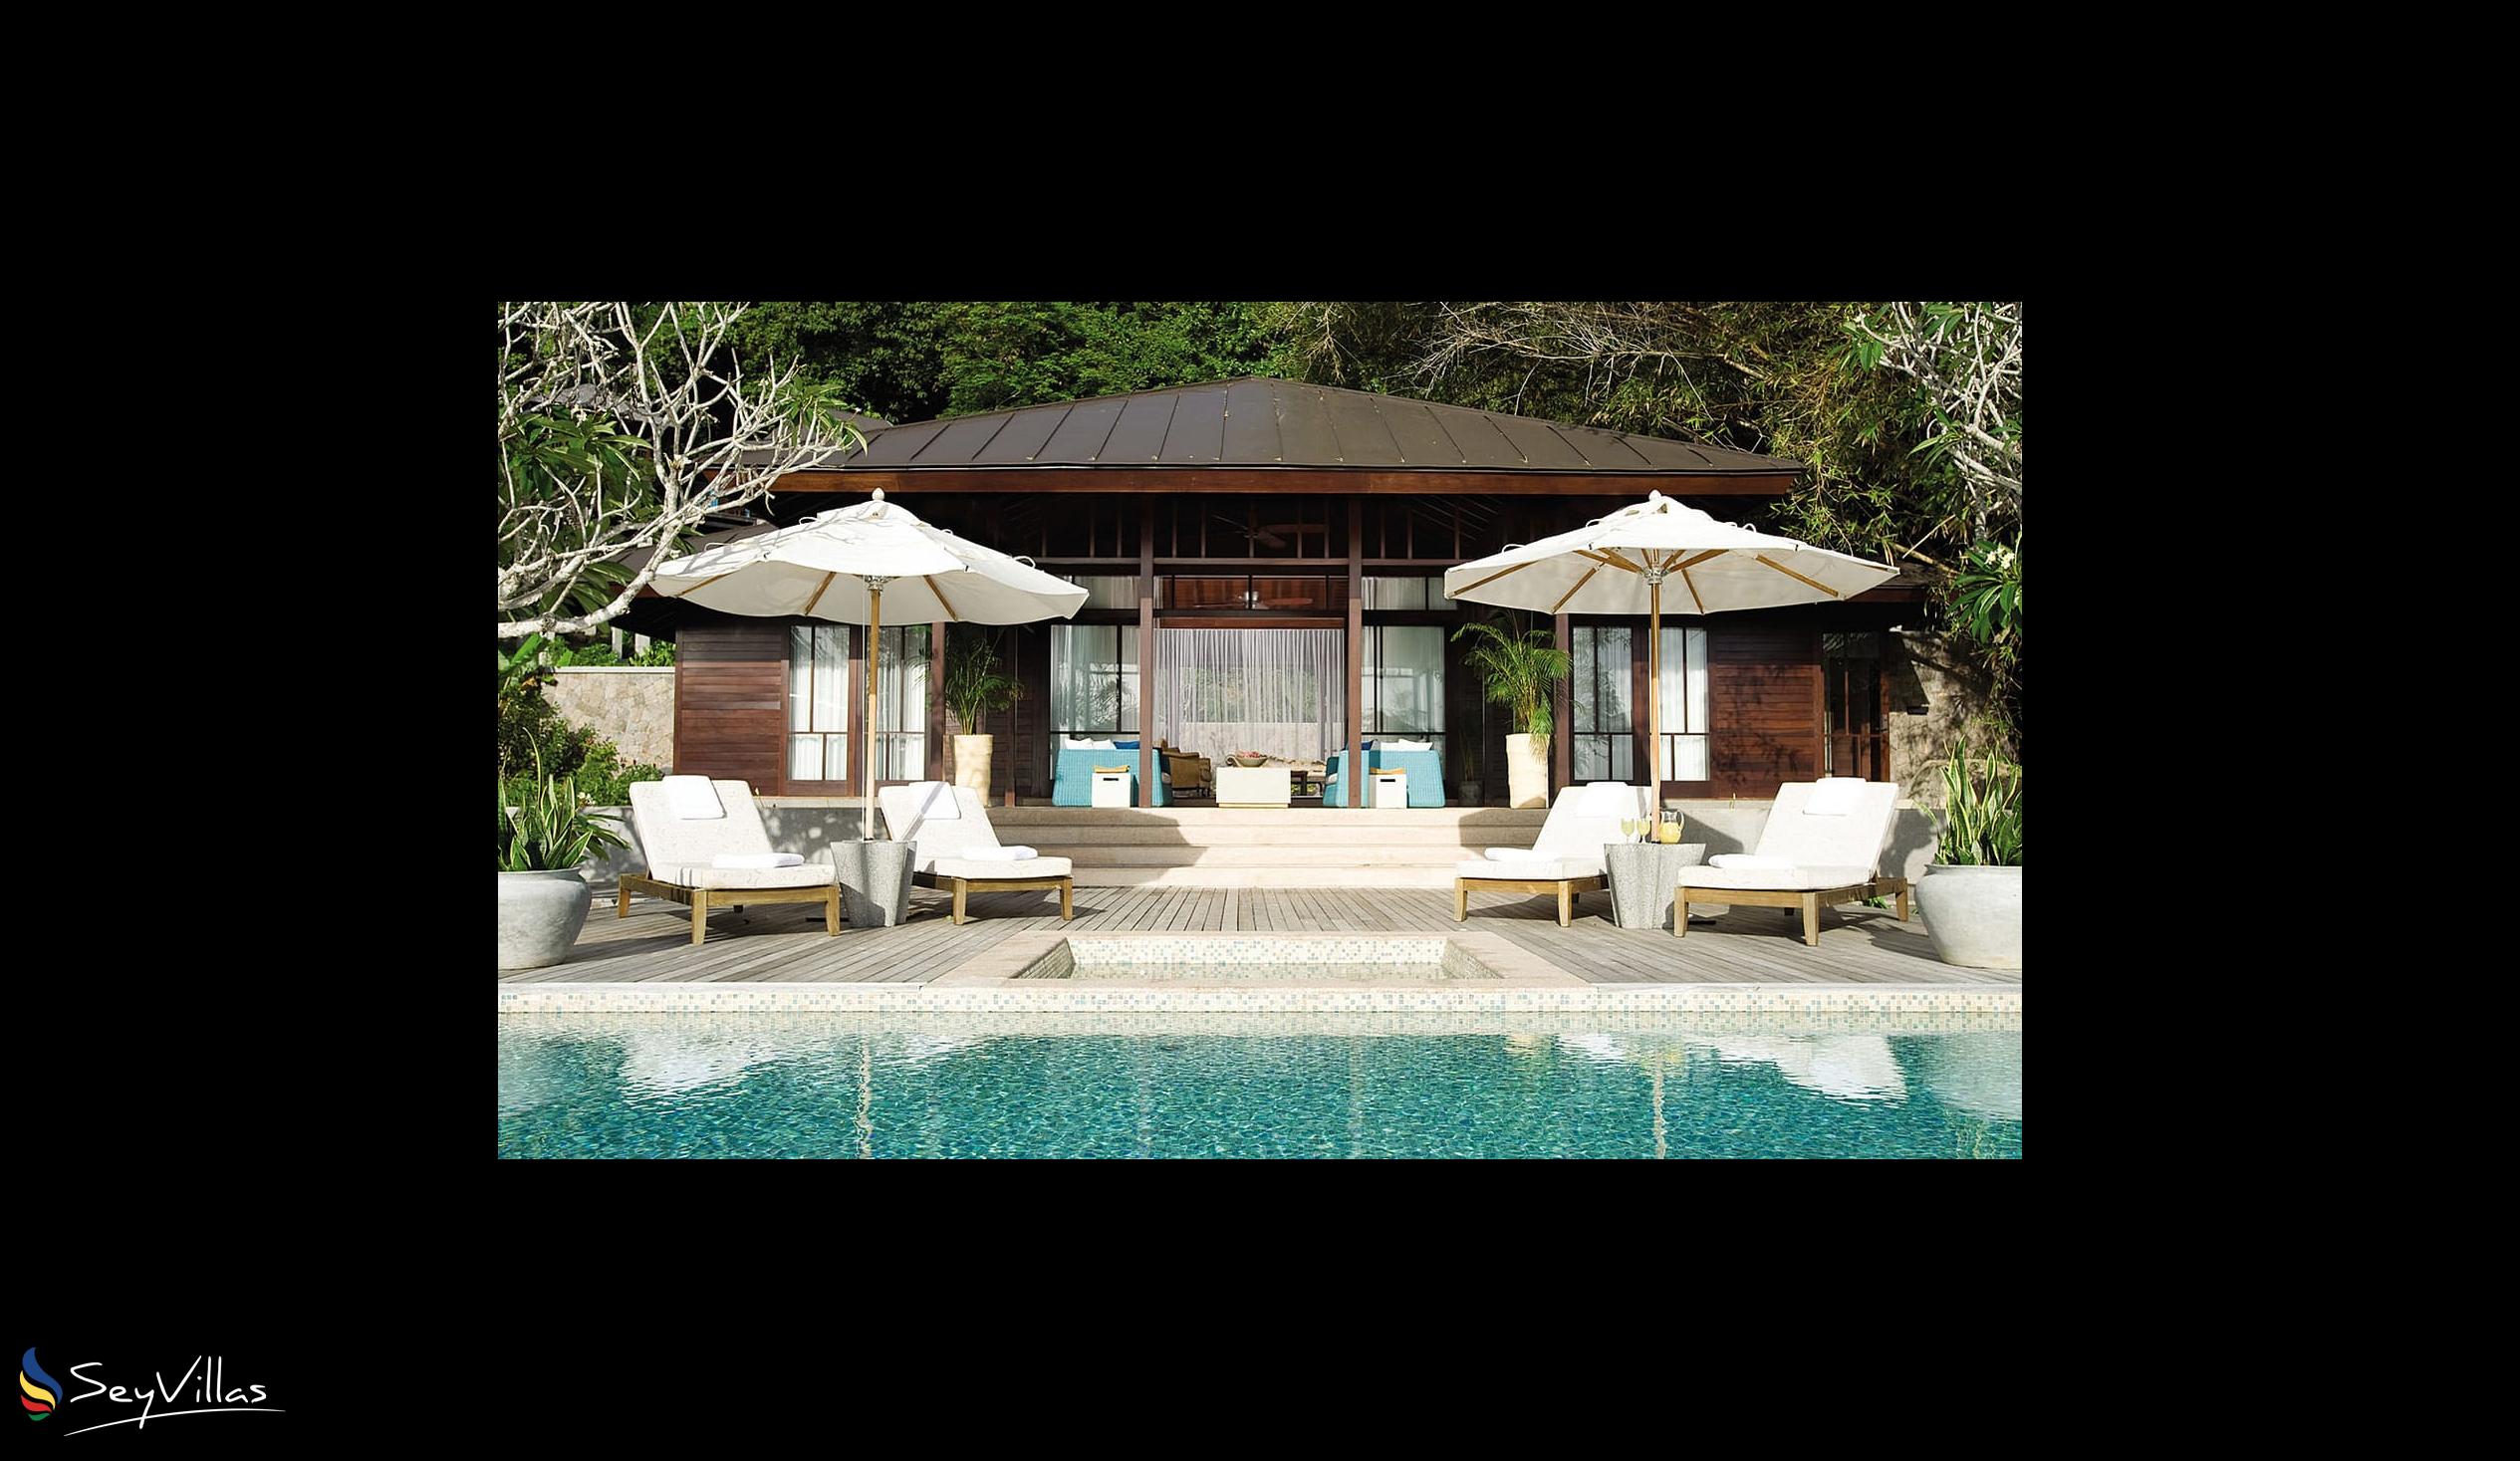 Photo 61: Four Seasons Resort - 3-Bedroom Presidential Suite - Mahé (Seychelles)